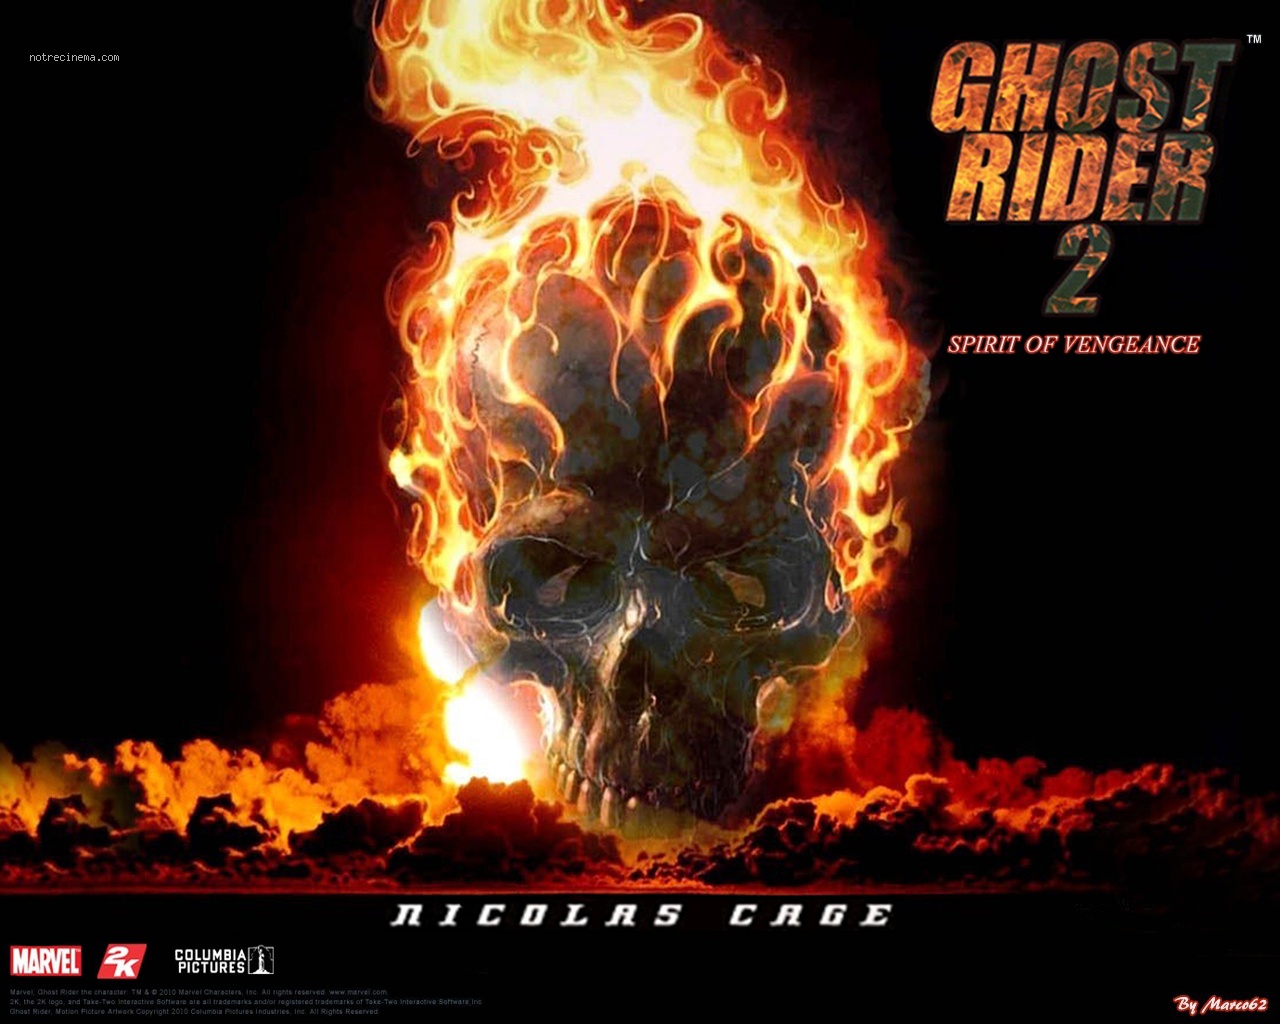 Ghost Rider 2 Lesprit de vengeance GHOST RIDER SPIRIT OF